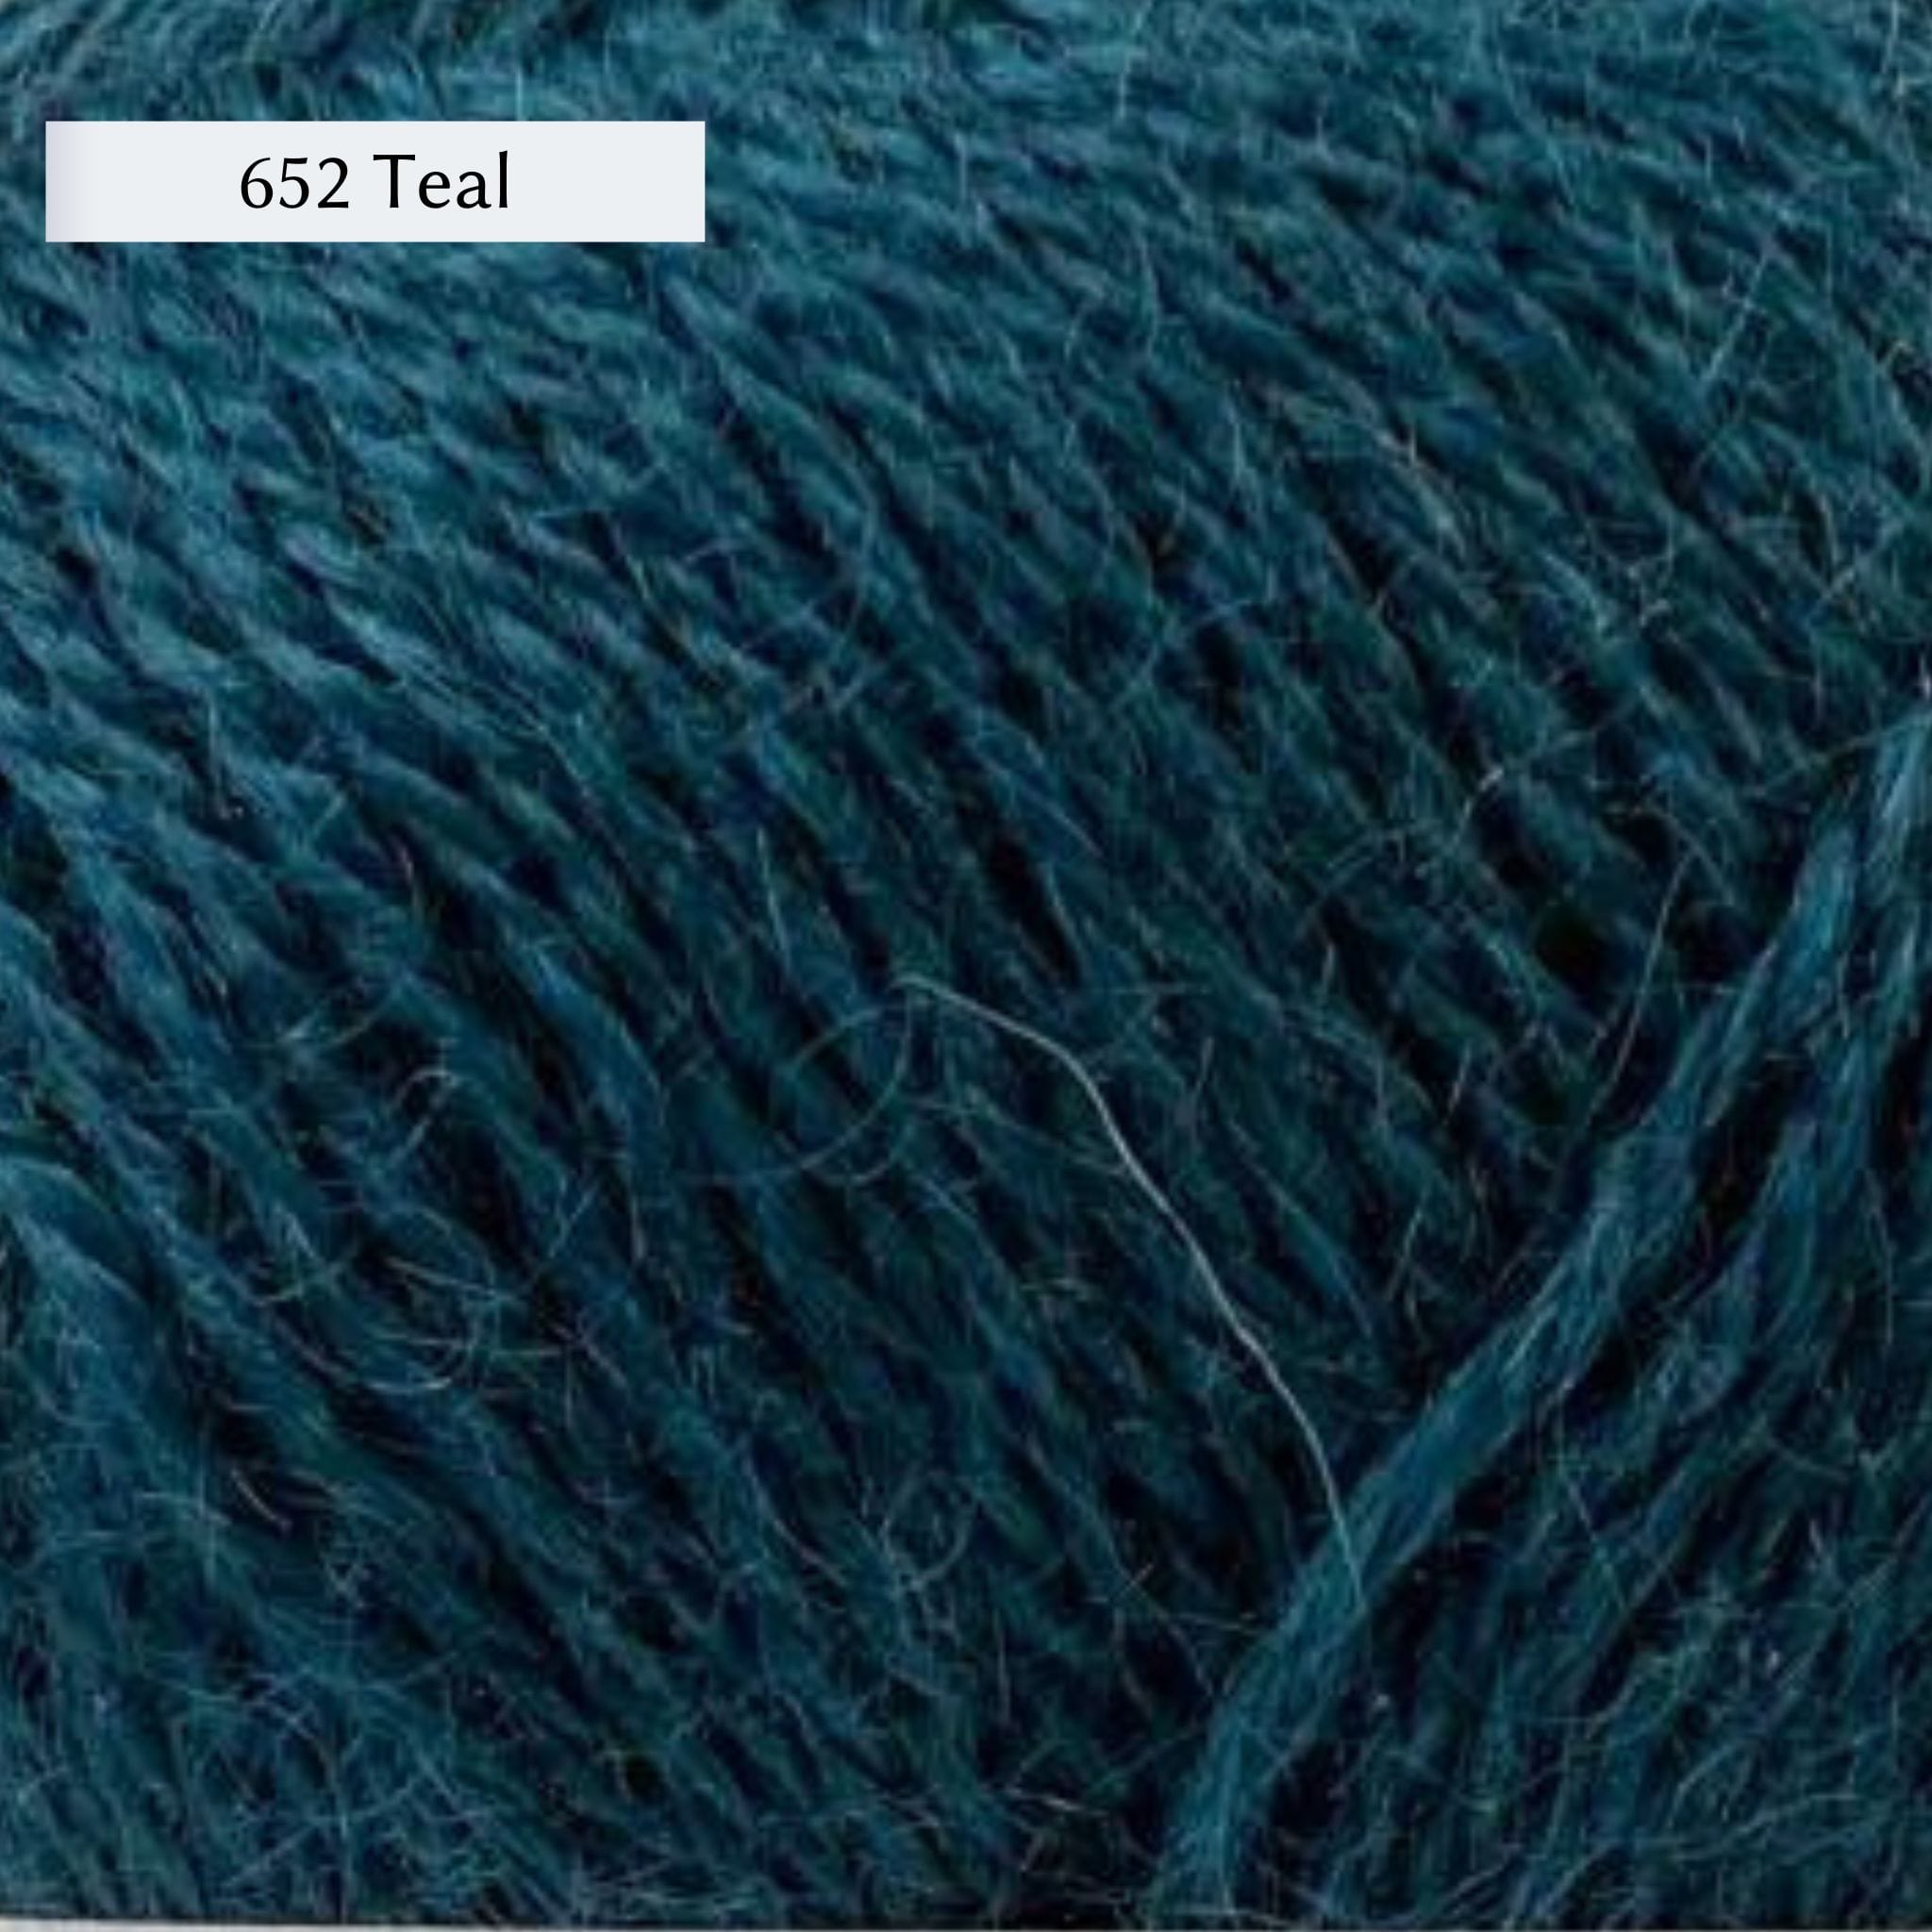 Wensleydale Longwool Sheep Shop 4ply yarn, a fingering weight yarn, in color 652 Teal, a saturated mallard teal blue-green